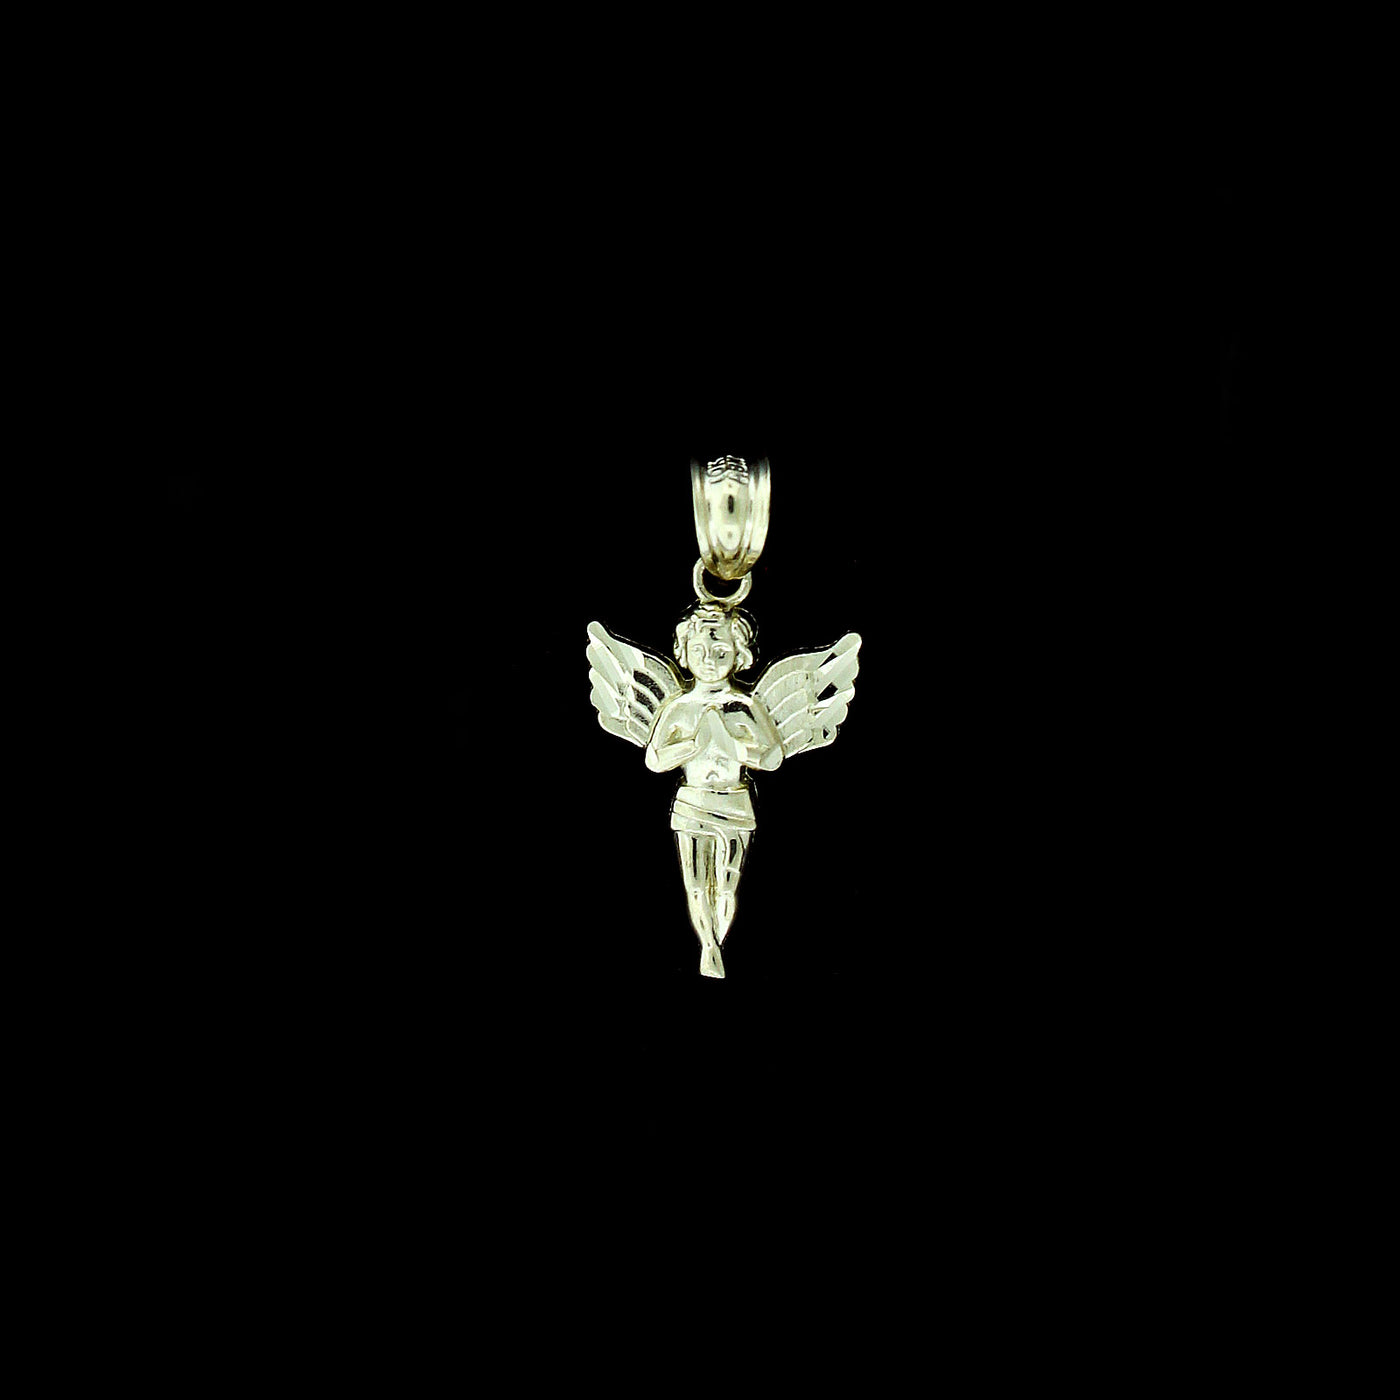 10K Solid Yellow Gold Diamond Cut Praying Angel Charm Pendant, 10KT Real Gold